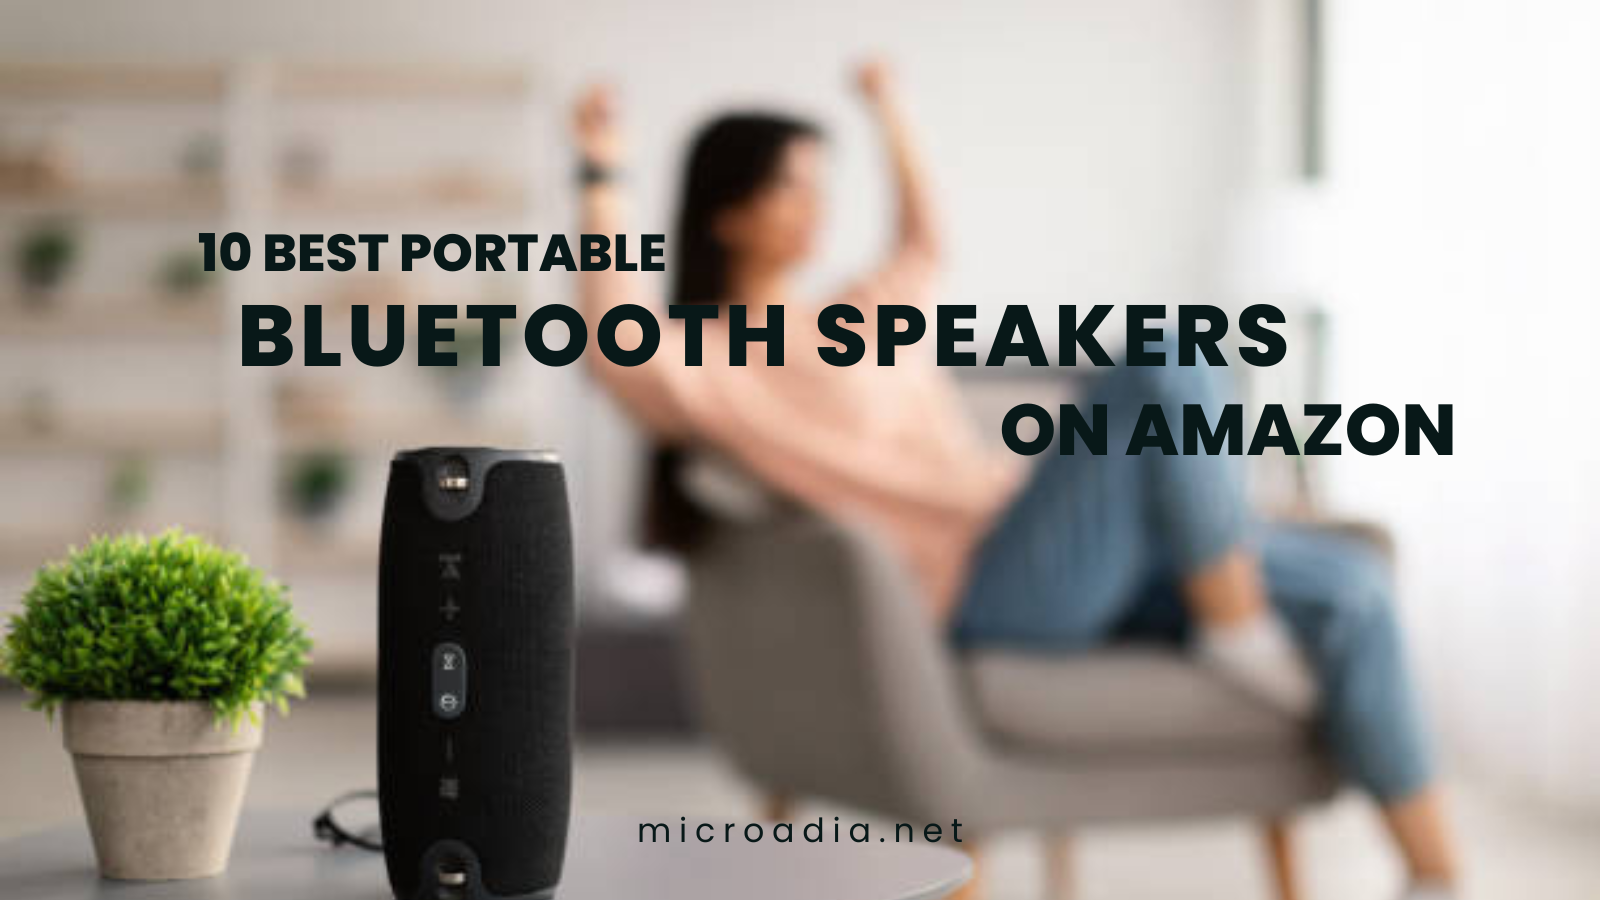 Top 10 Best Selling Portable Bluetooth Speaker on Amazon